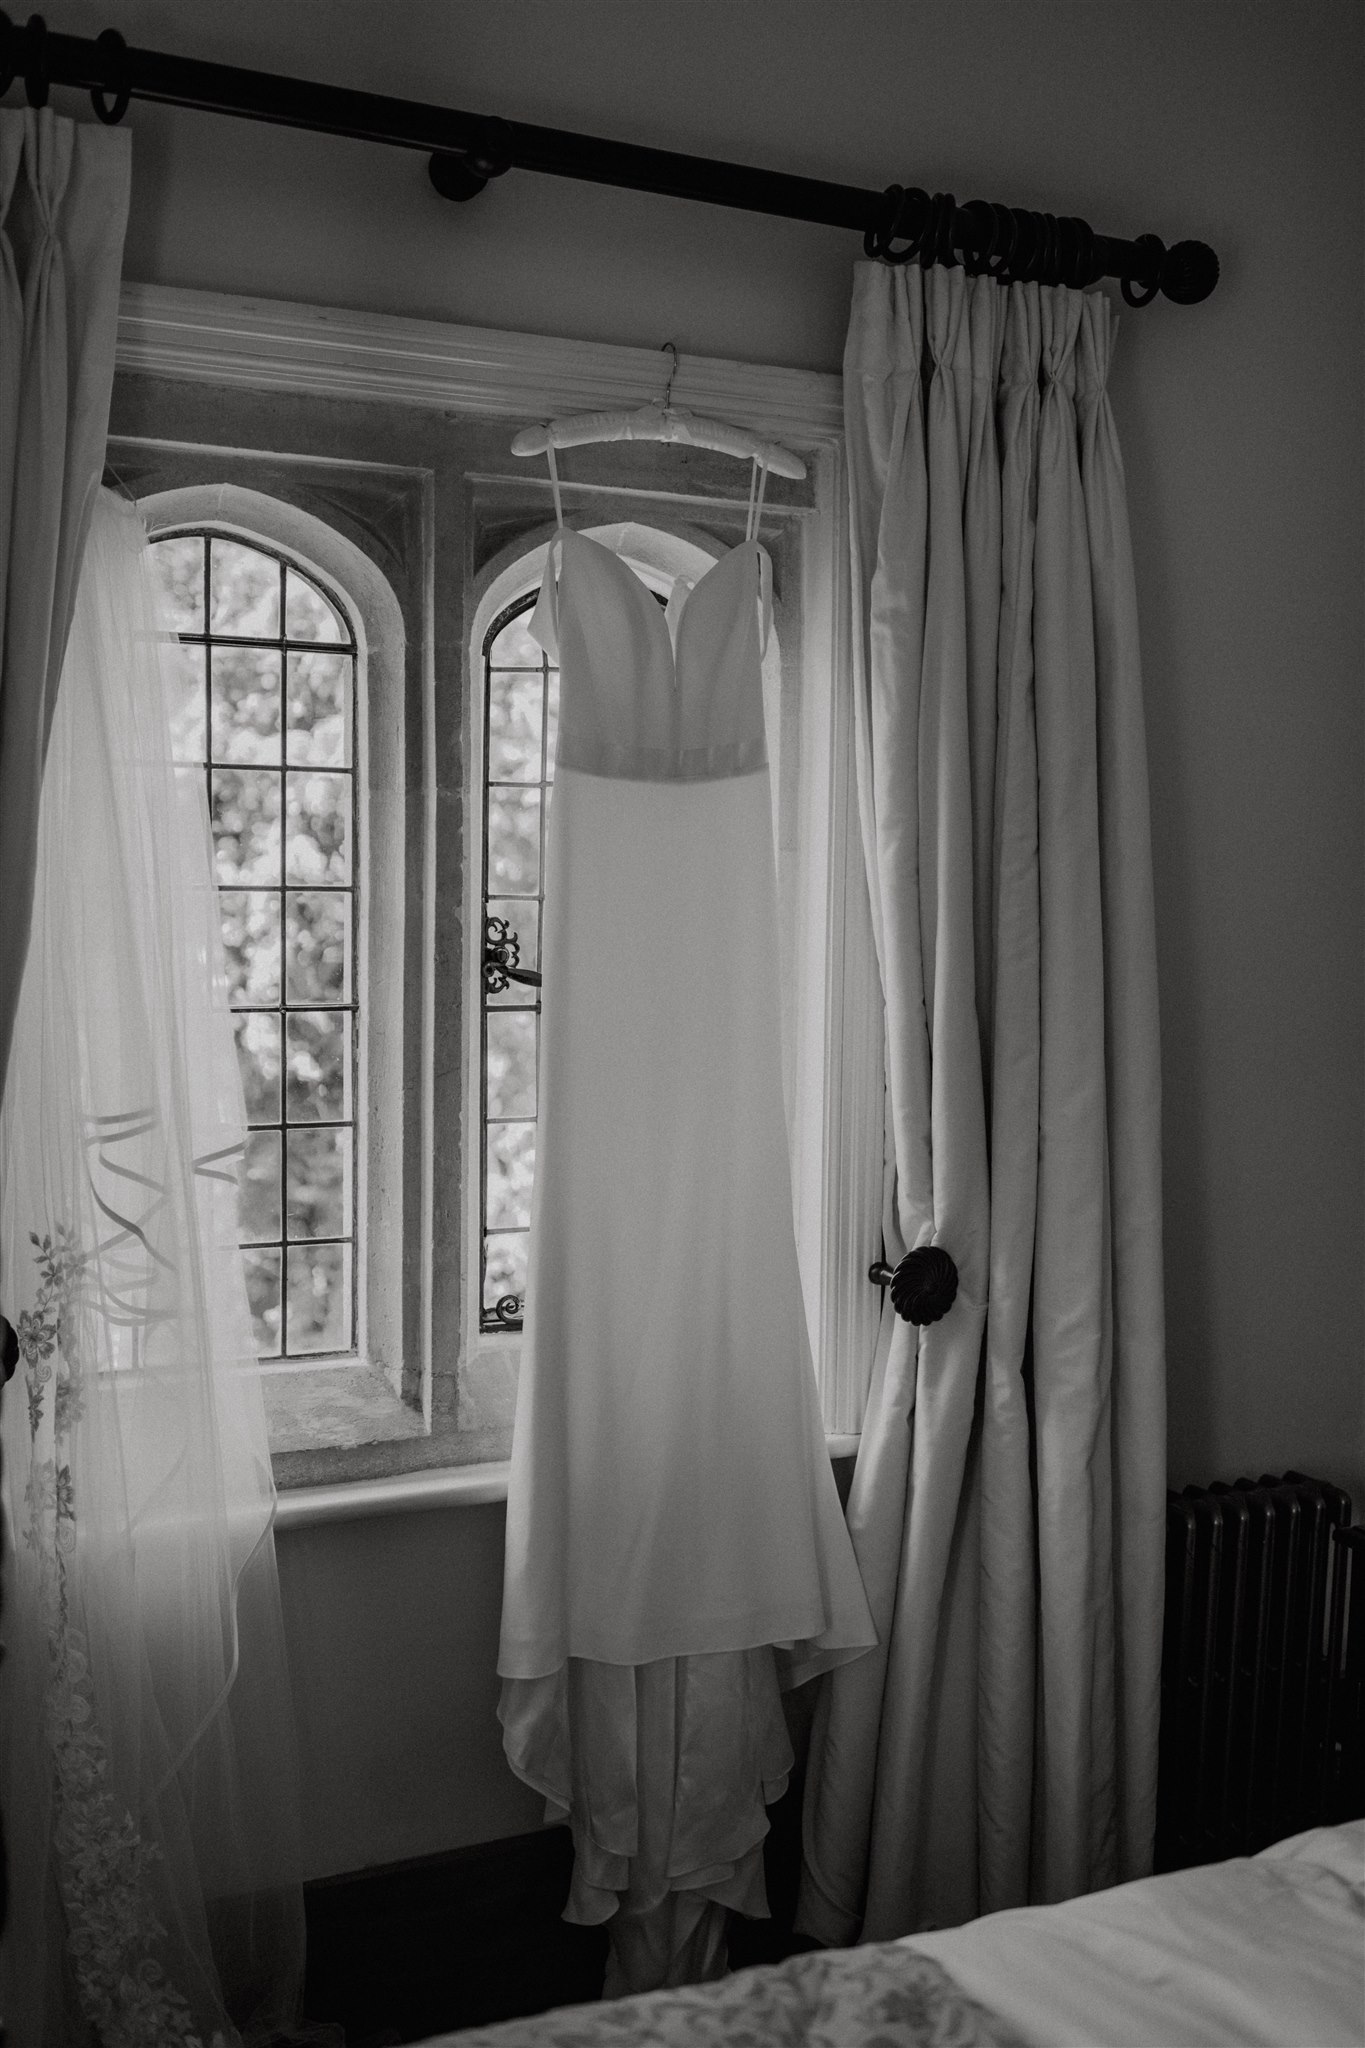 Wedding dress hanging in window